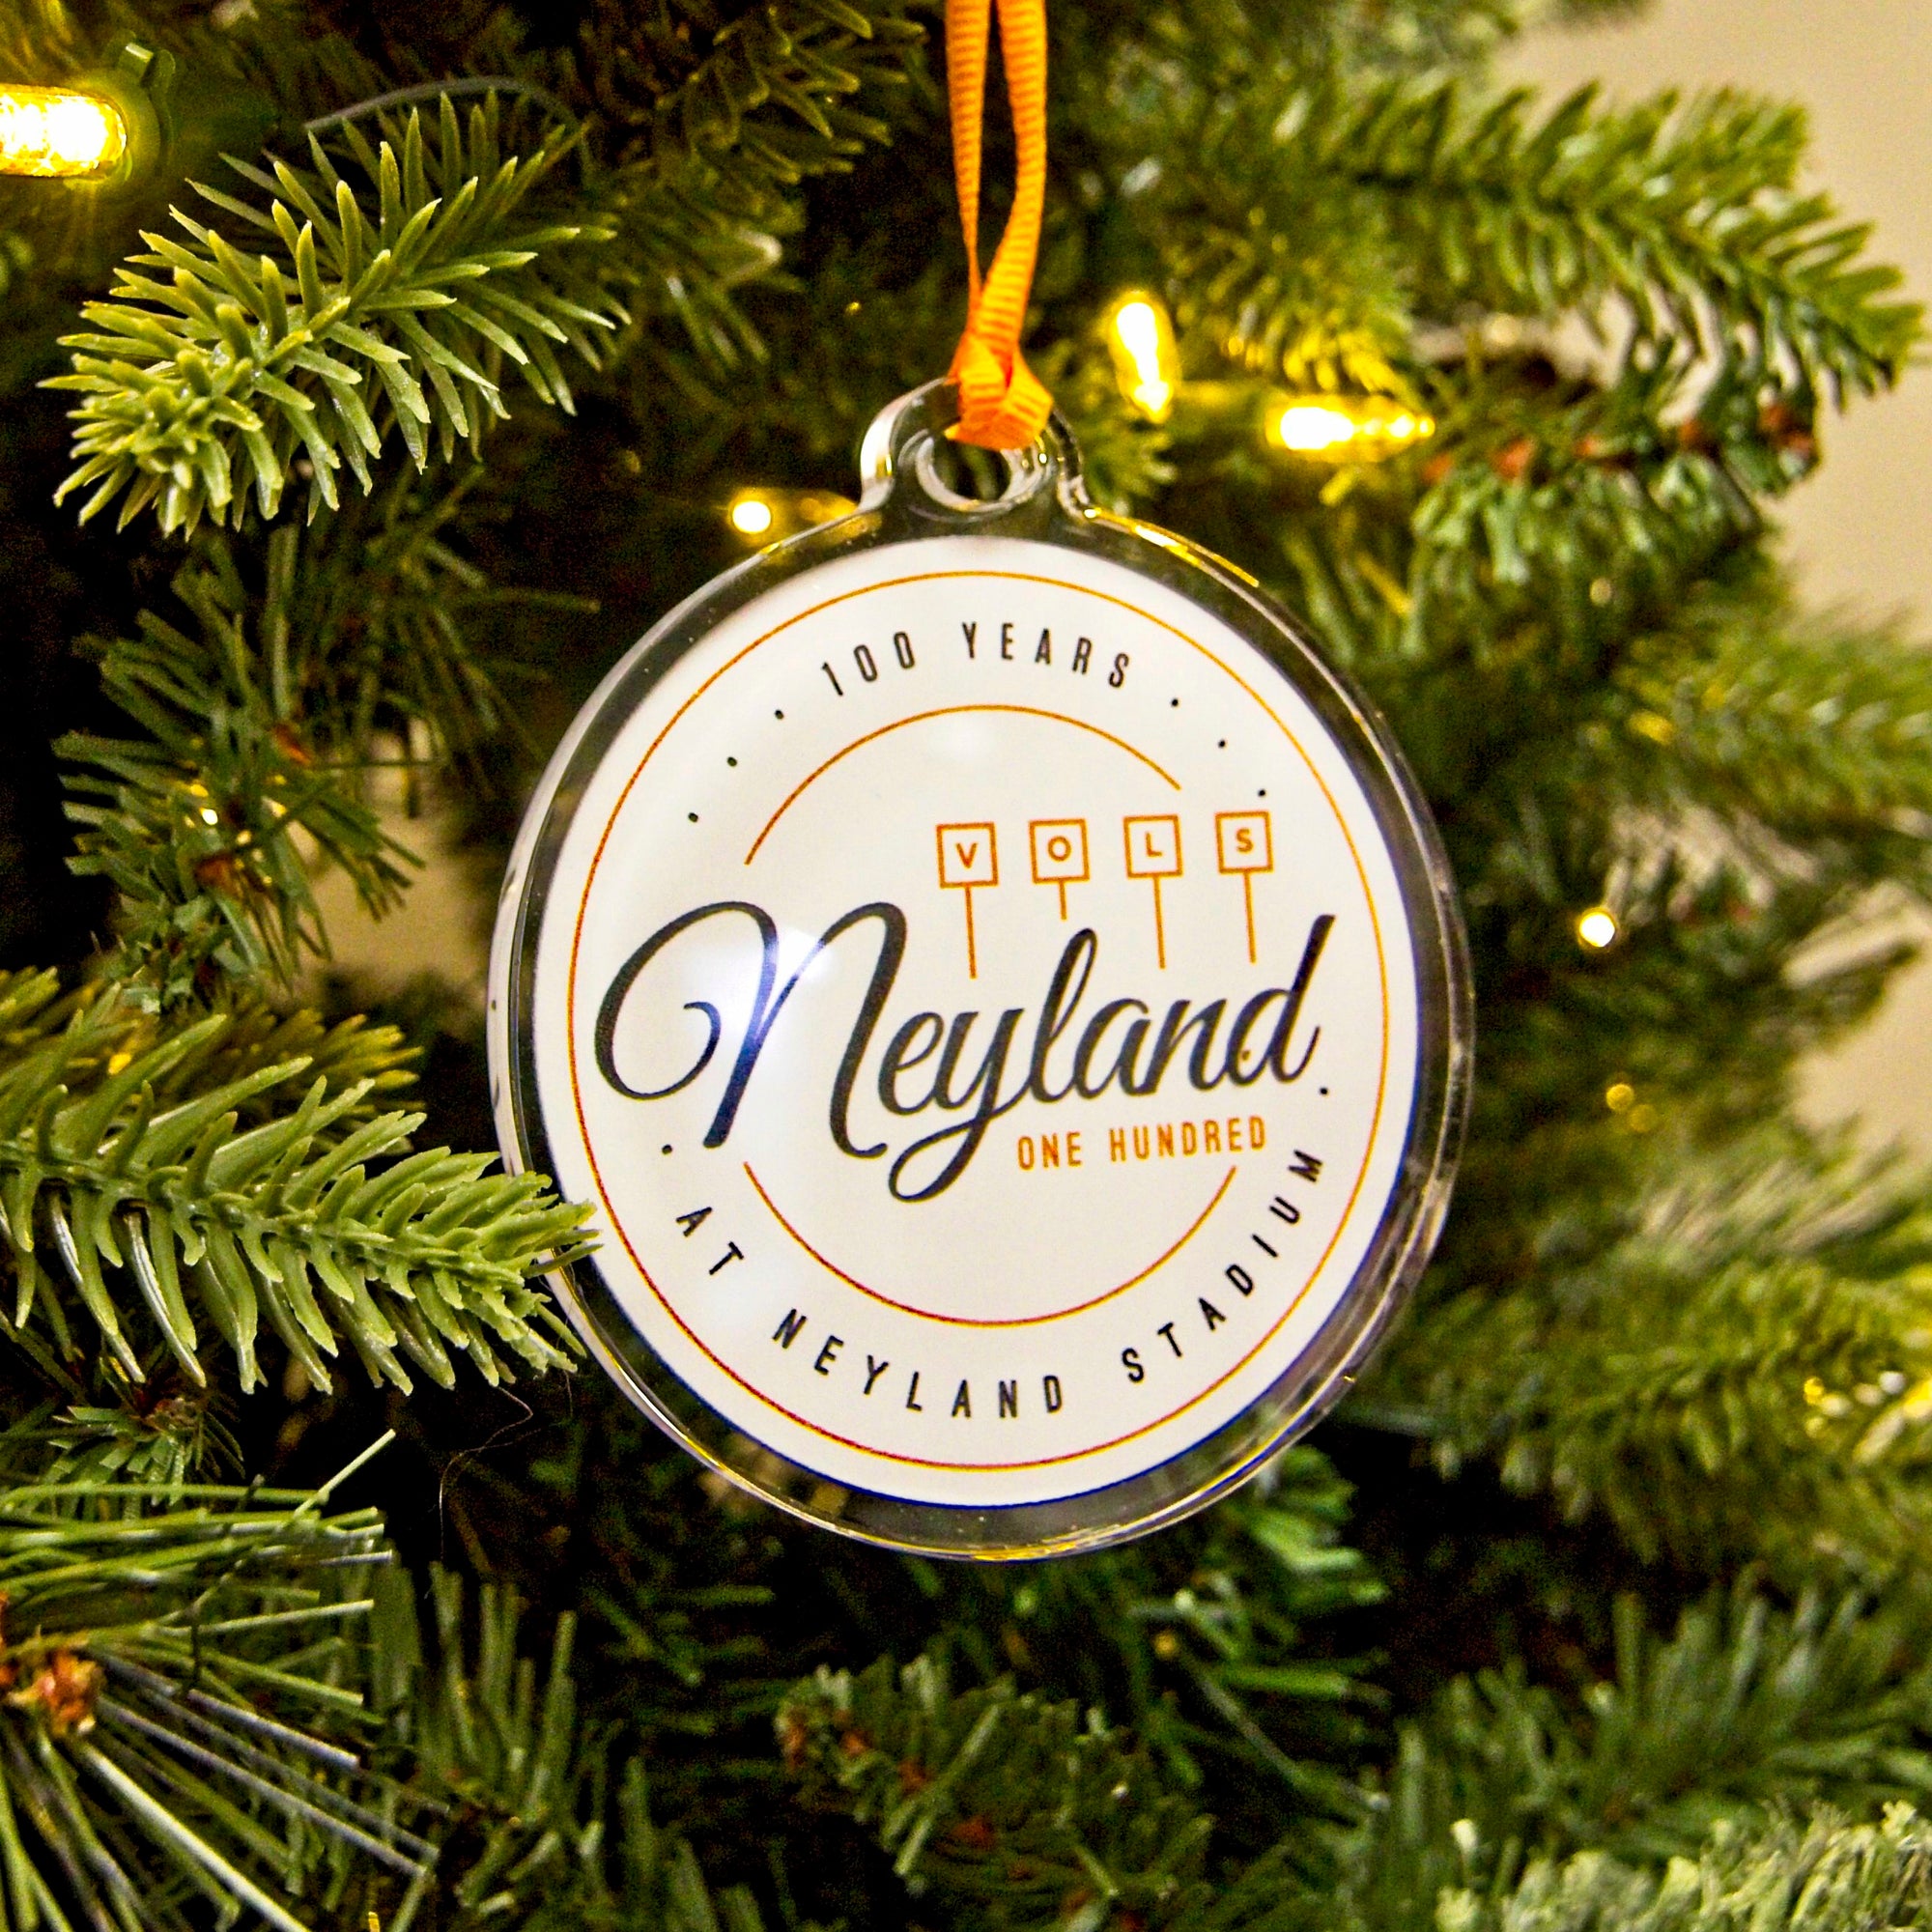 Tennessee Volunteers - Neyland 100 White Ornament & Bag Tag